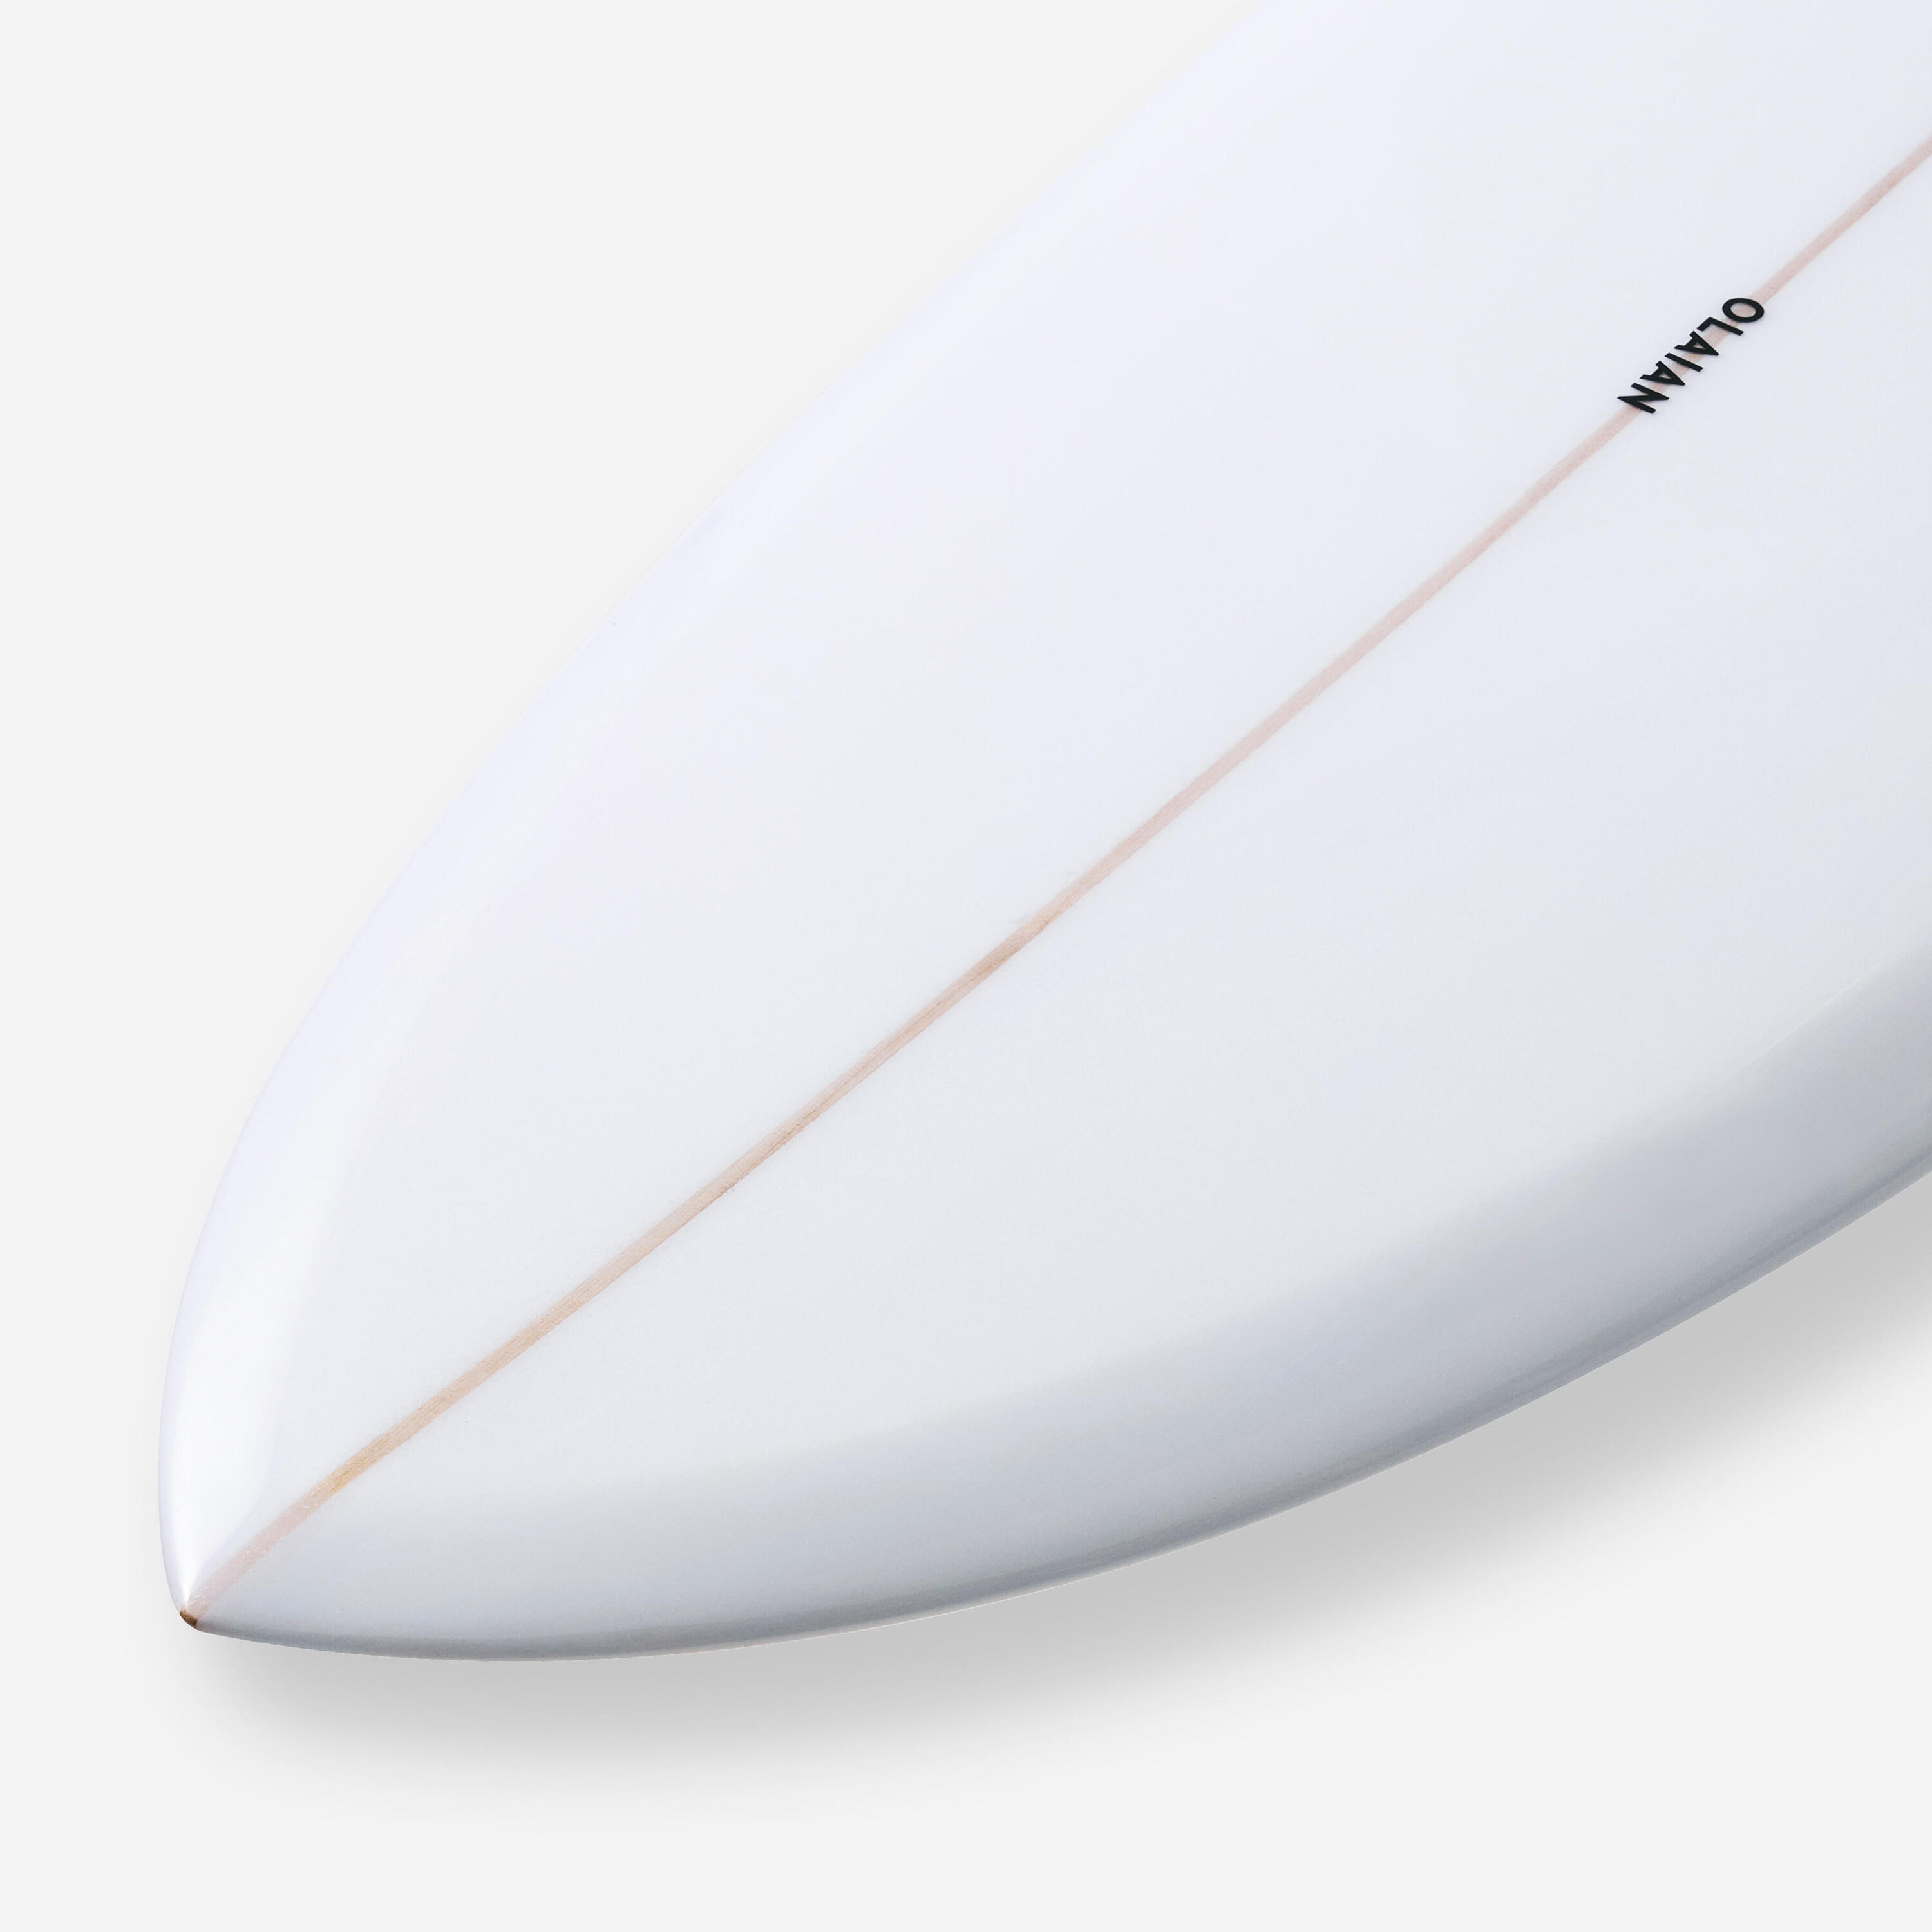 Surfboard 7'4" - 900 mid-length white 3/10